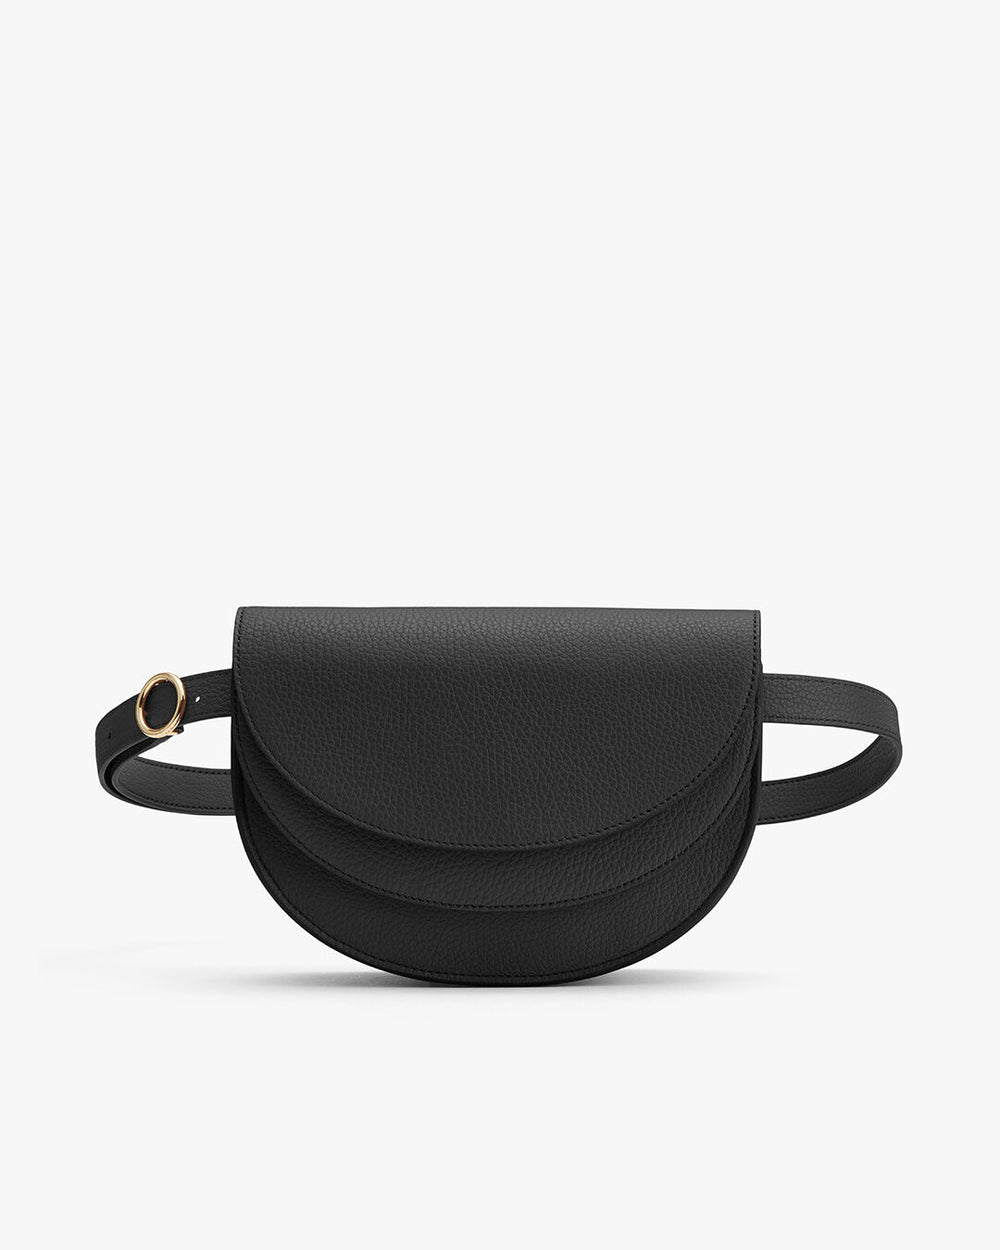 Small half-circle shaped shoulder bag with a flap closure and strap.